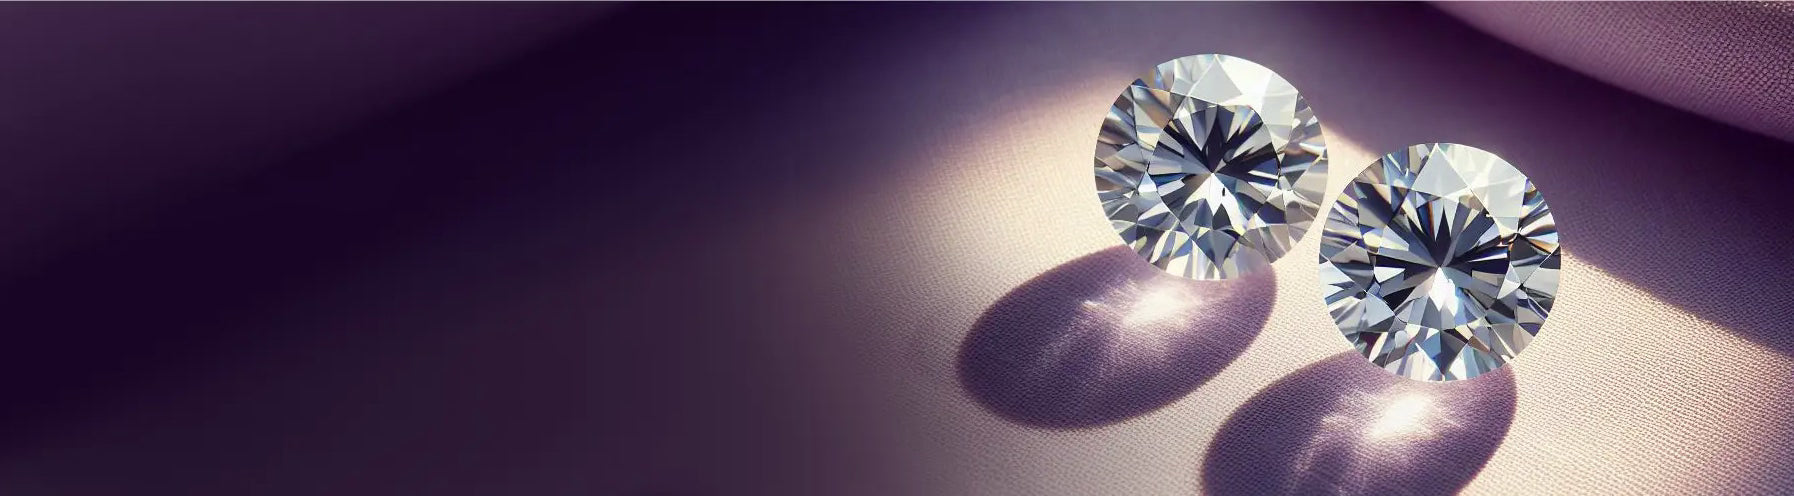 lab created diamonds and moissanite diamonds rings and jewelry at Quorri